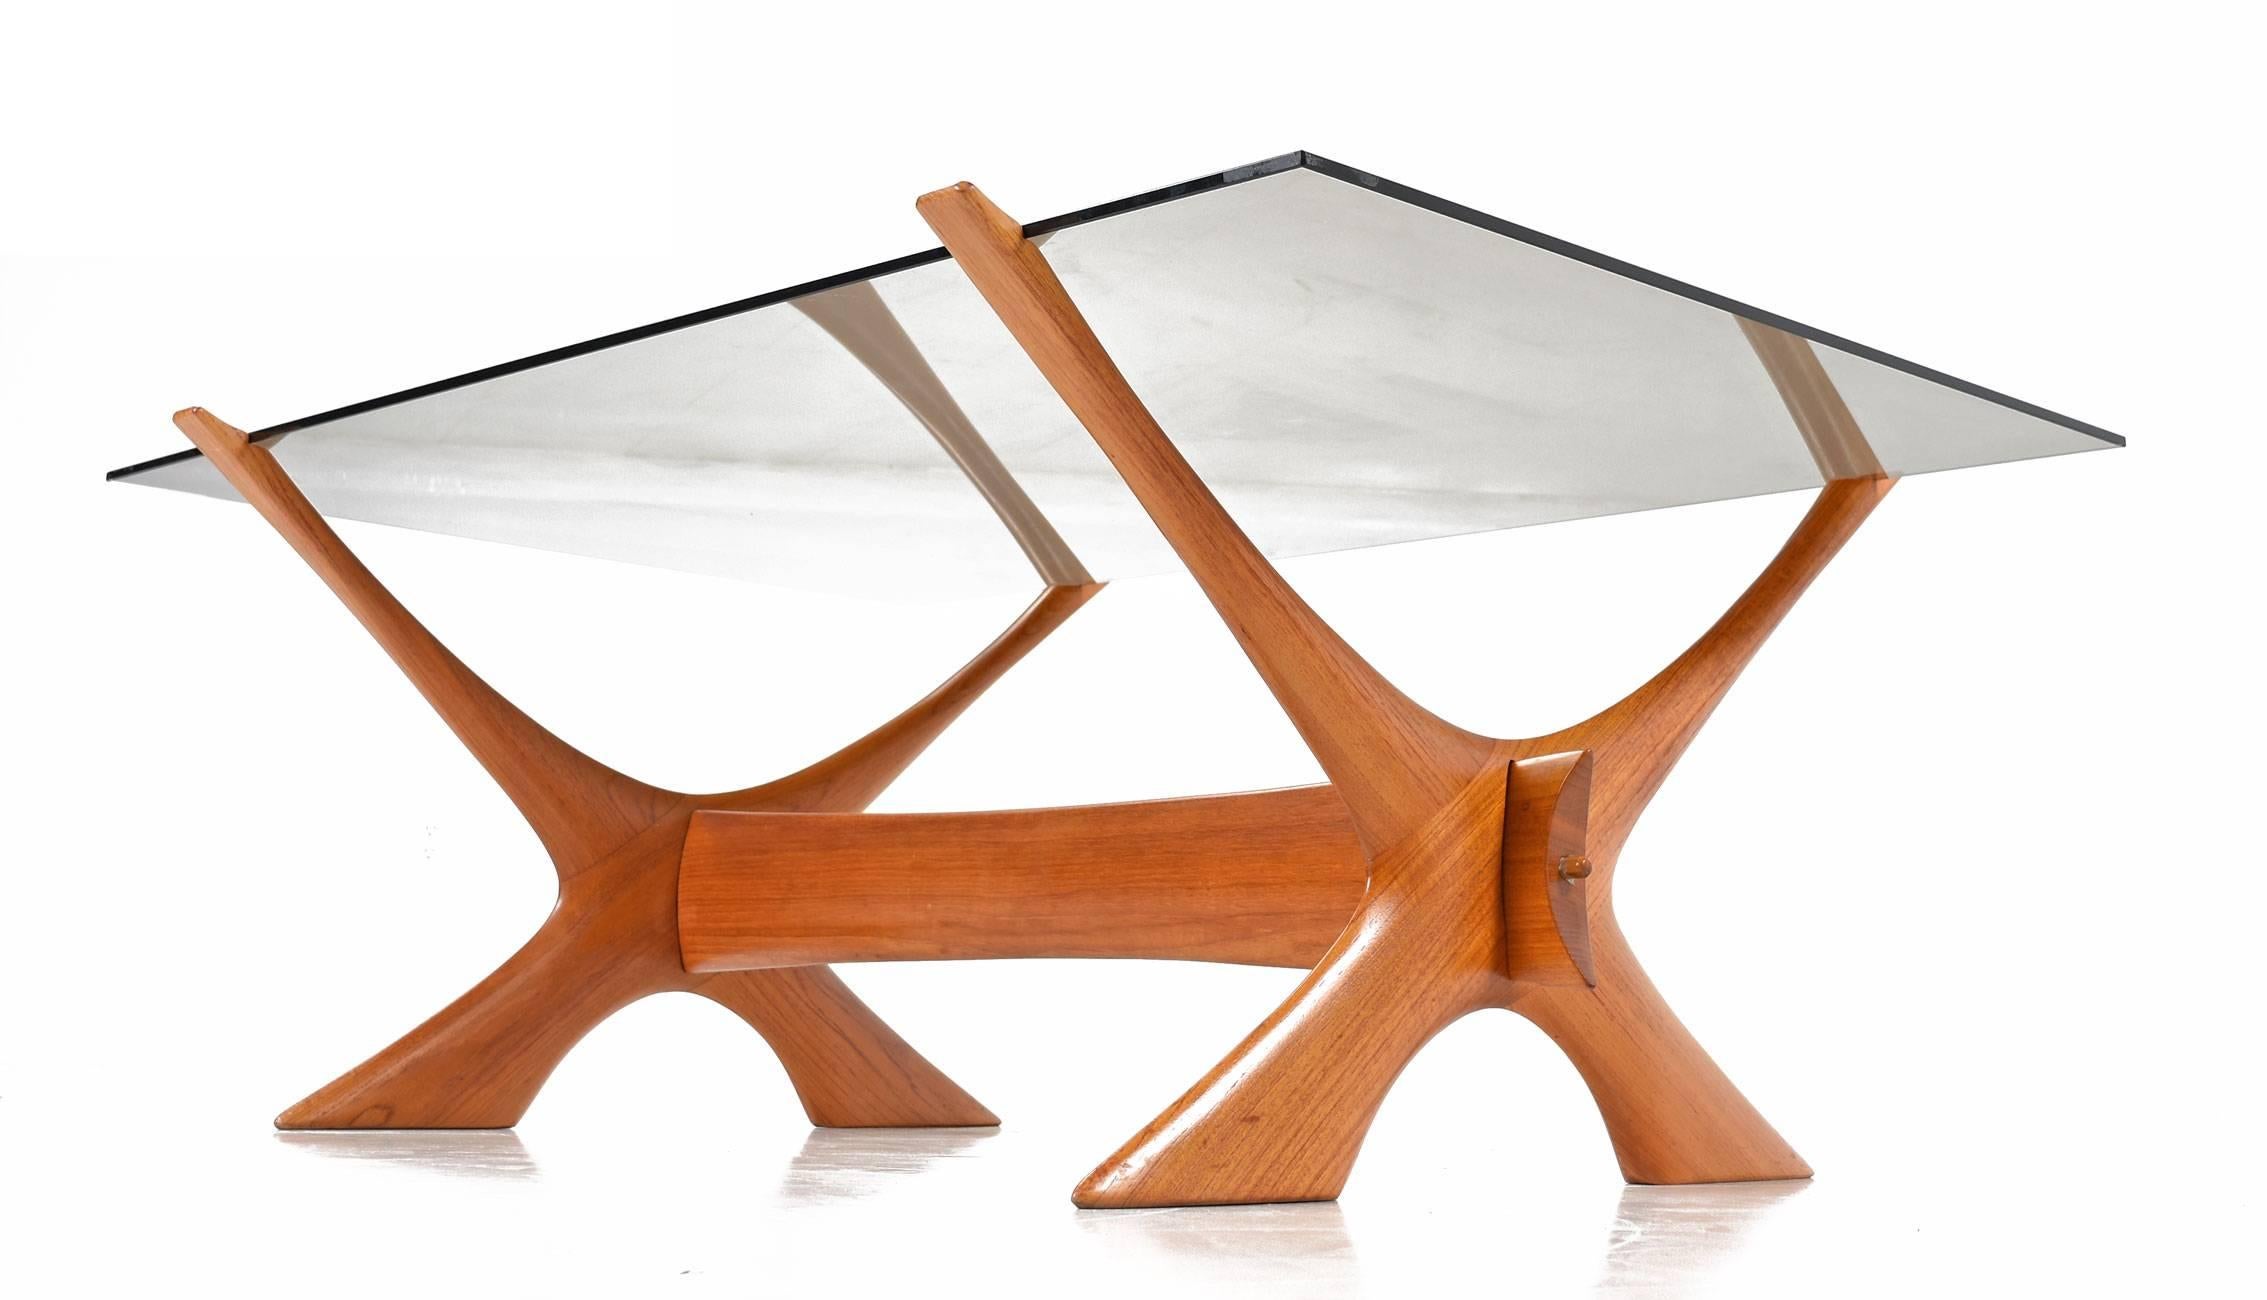 Scandinavian Modern Fredrik Schriever-Abeln Teak and Glass Condor Coffee Table by Örebro, 1960s